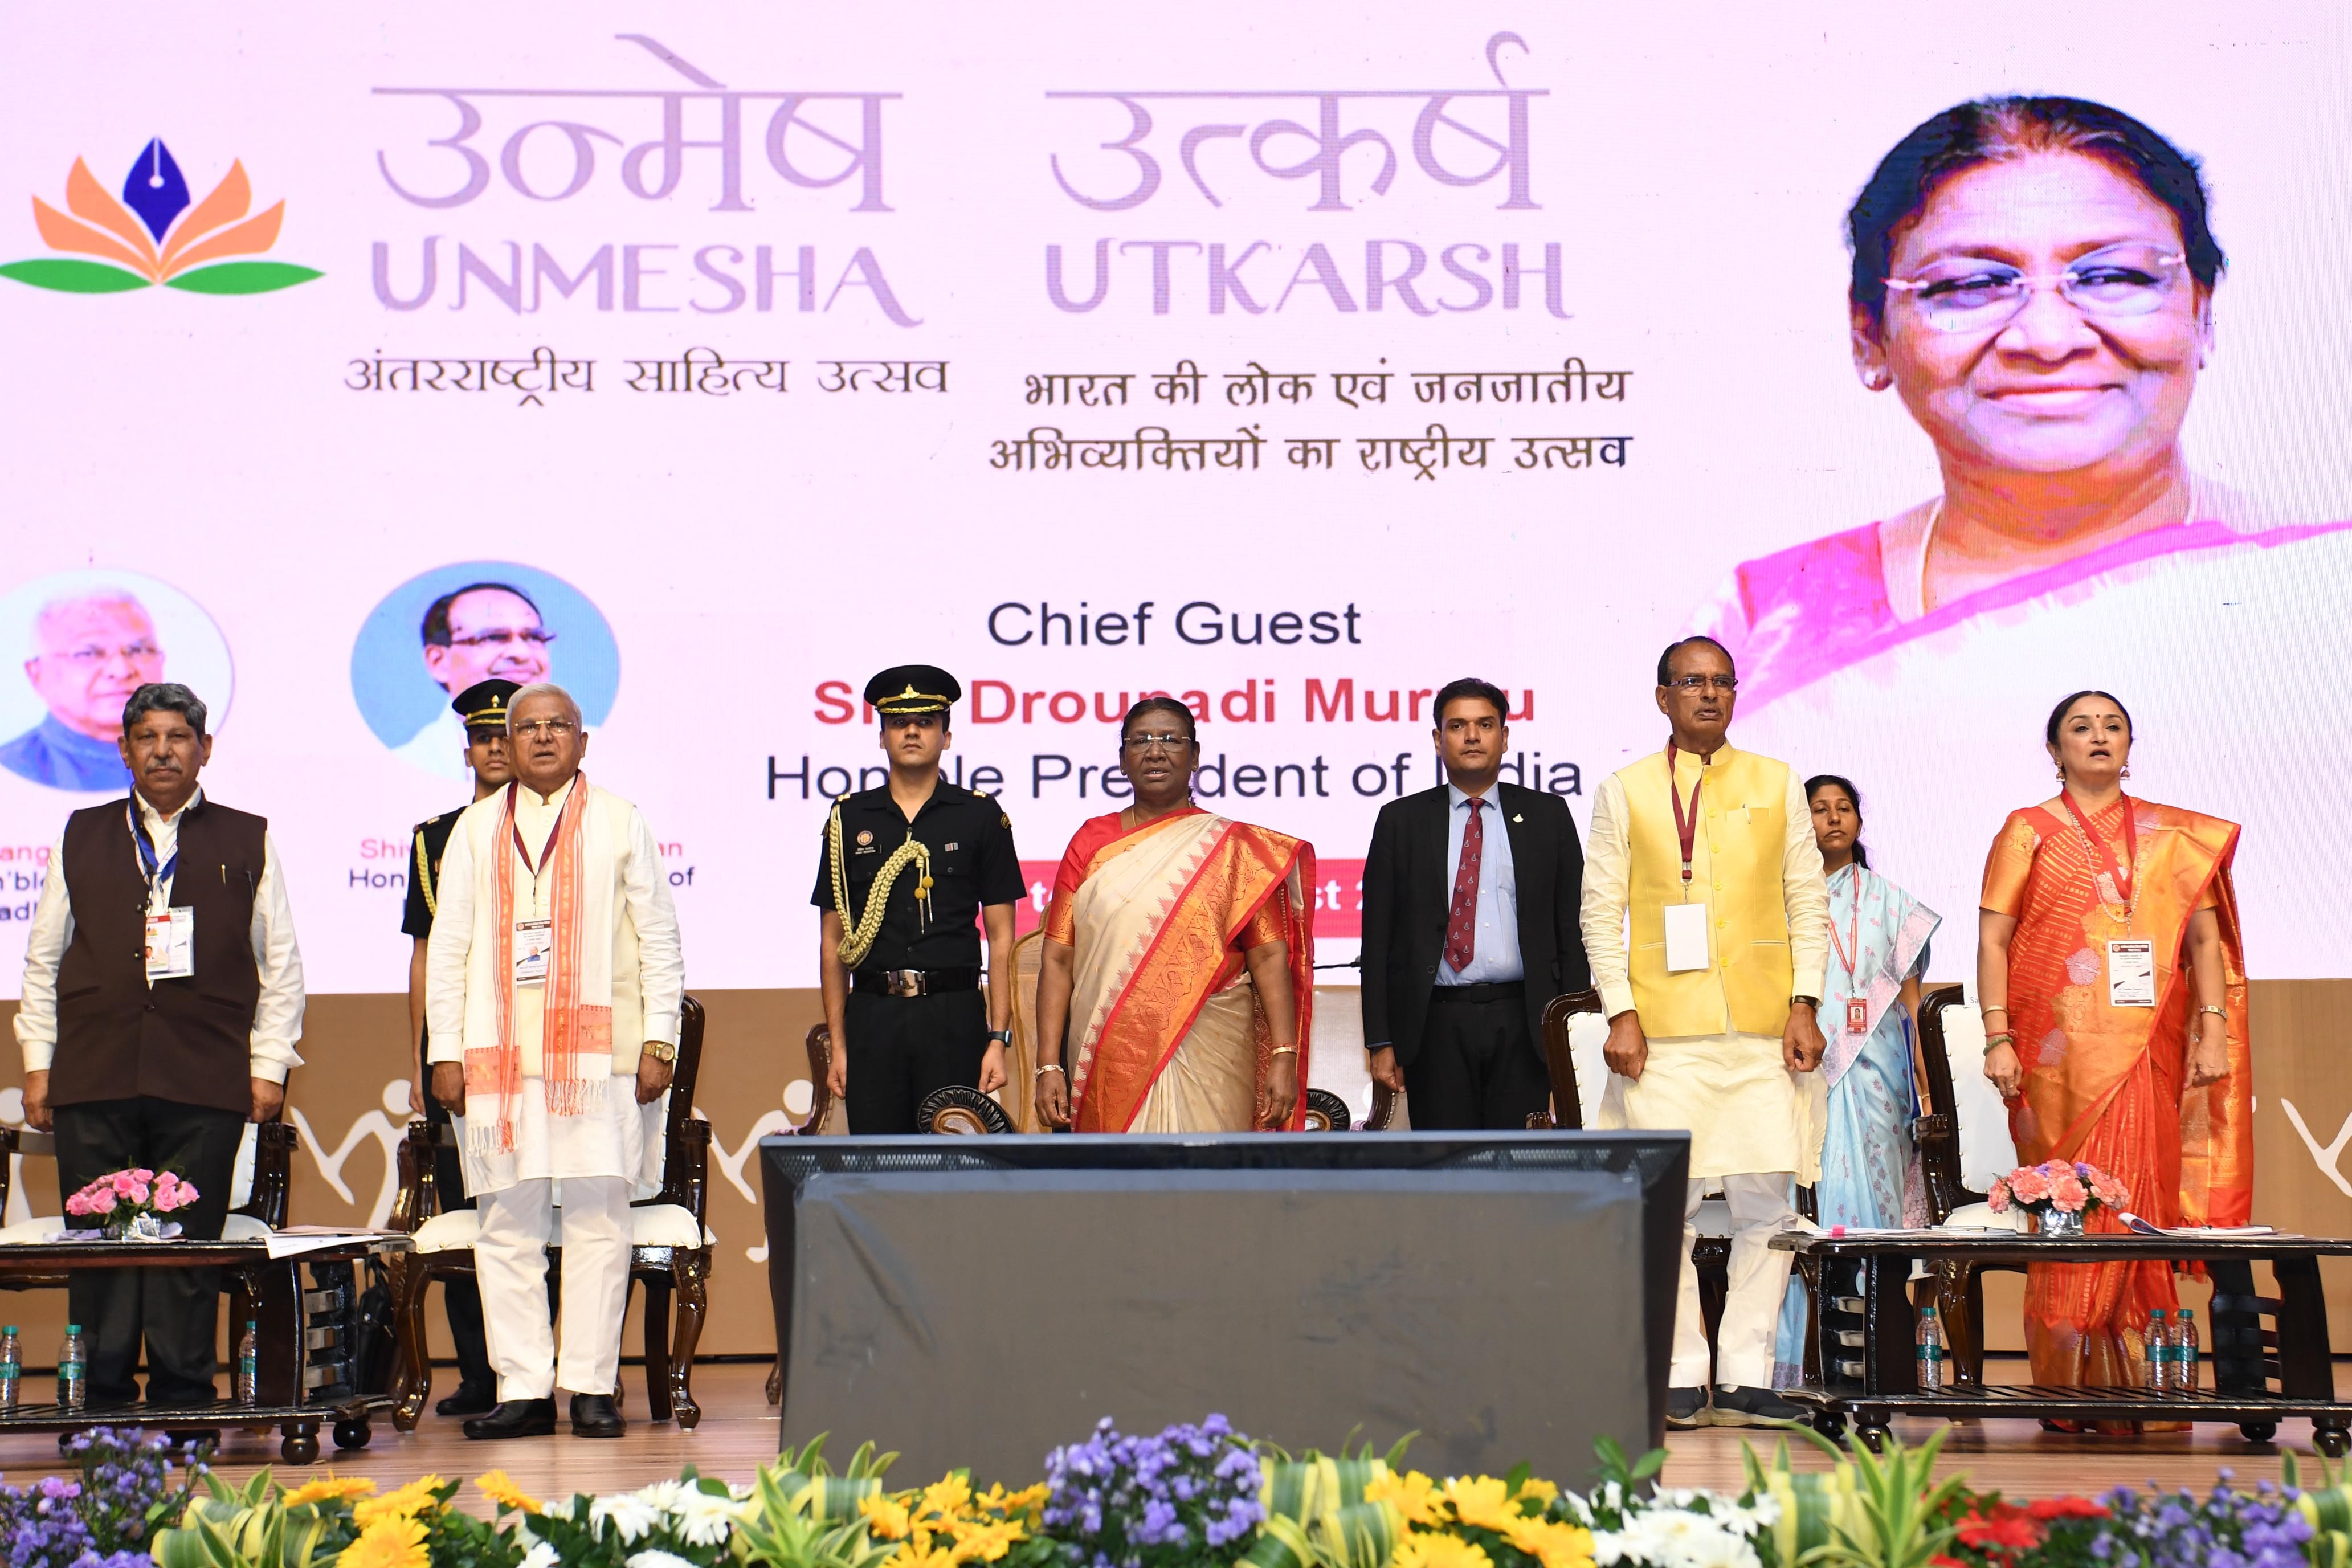 The President of India, Smt Droupadi Murmu inaugurated ‘Unmesha’ – International Literature Festival and ‘Utkarsh’ – Festival of Folk and Tribal Performing Arts on August 3, 2023 at Bhopal, Madhya Pradesh.